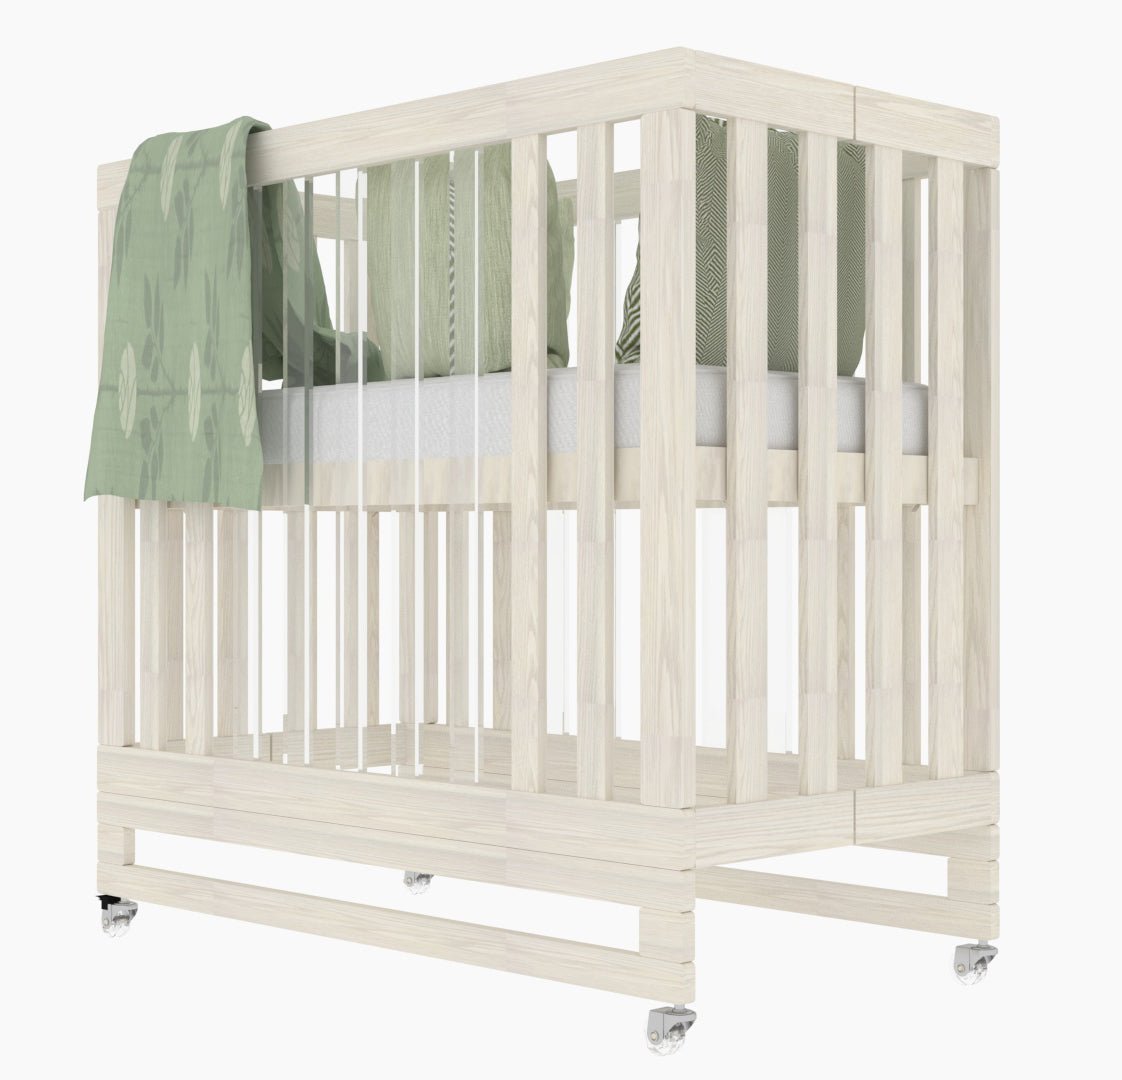 Melo Caress Mini Foldable Crib - ANB Baby -766429782384$300 - $500